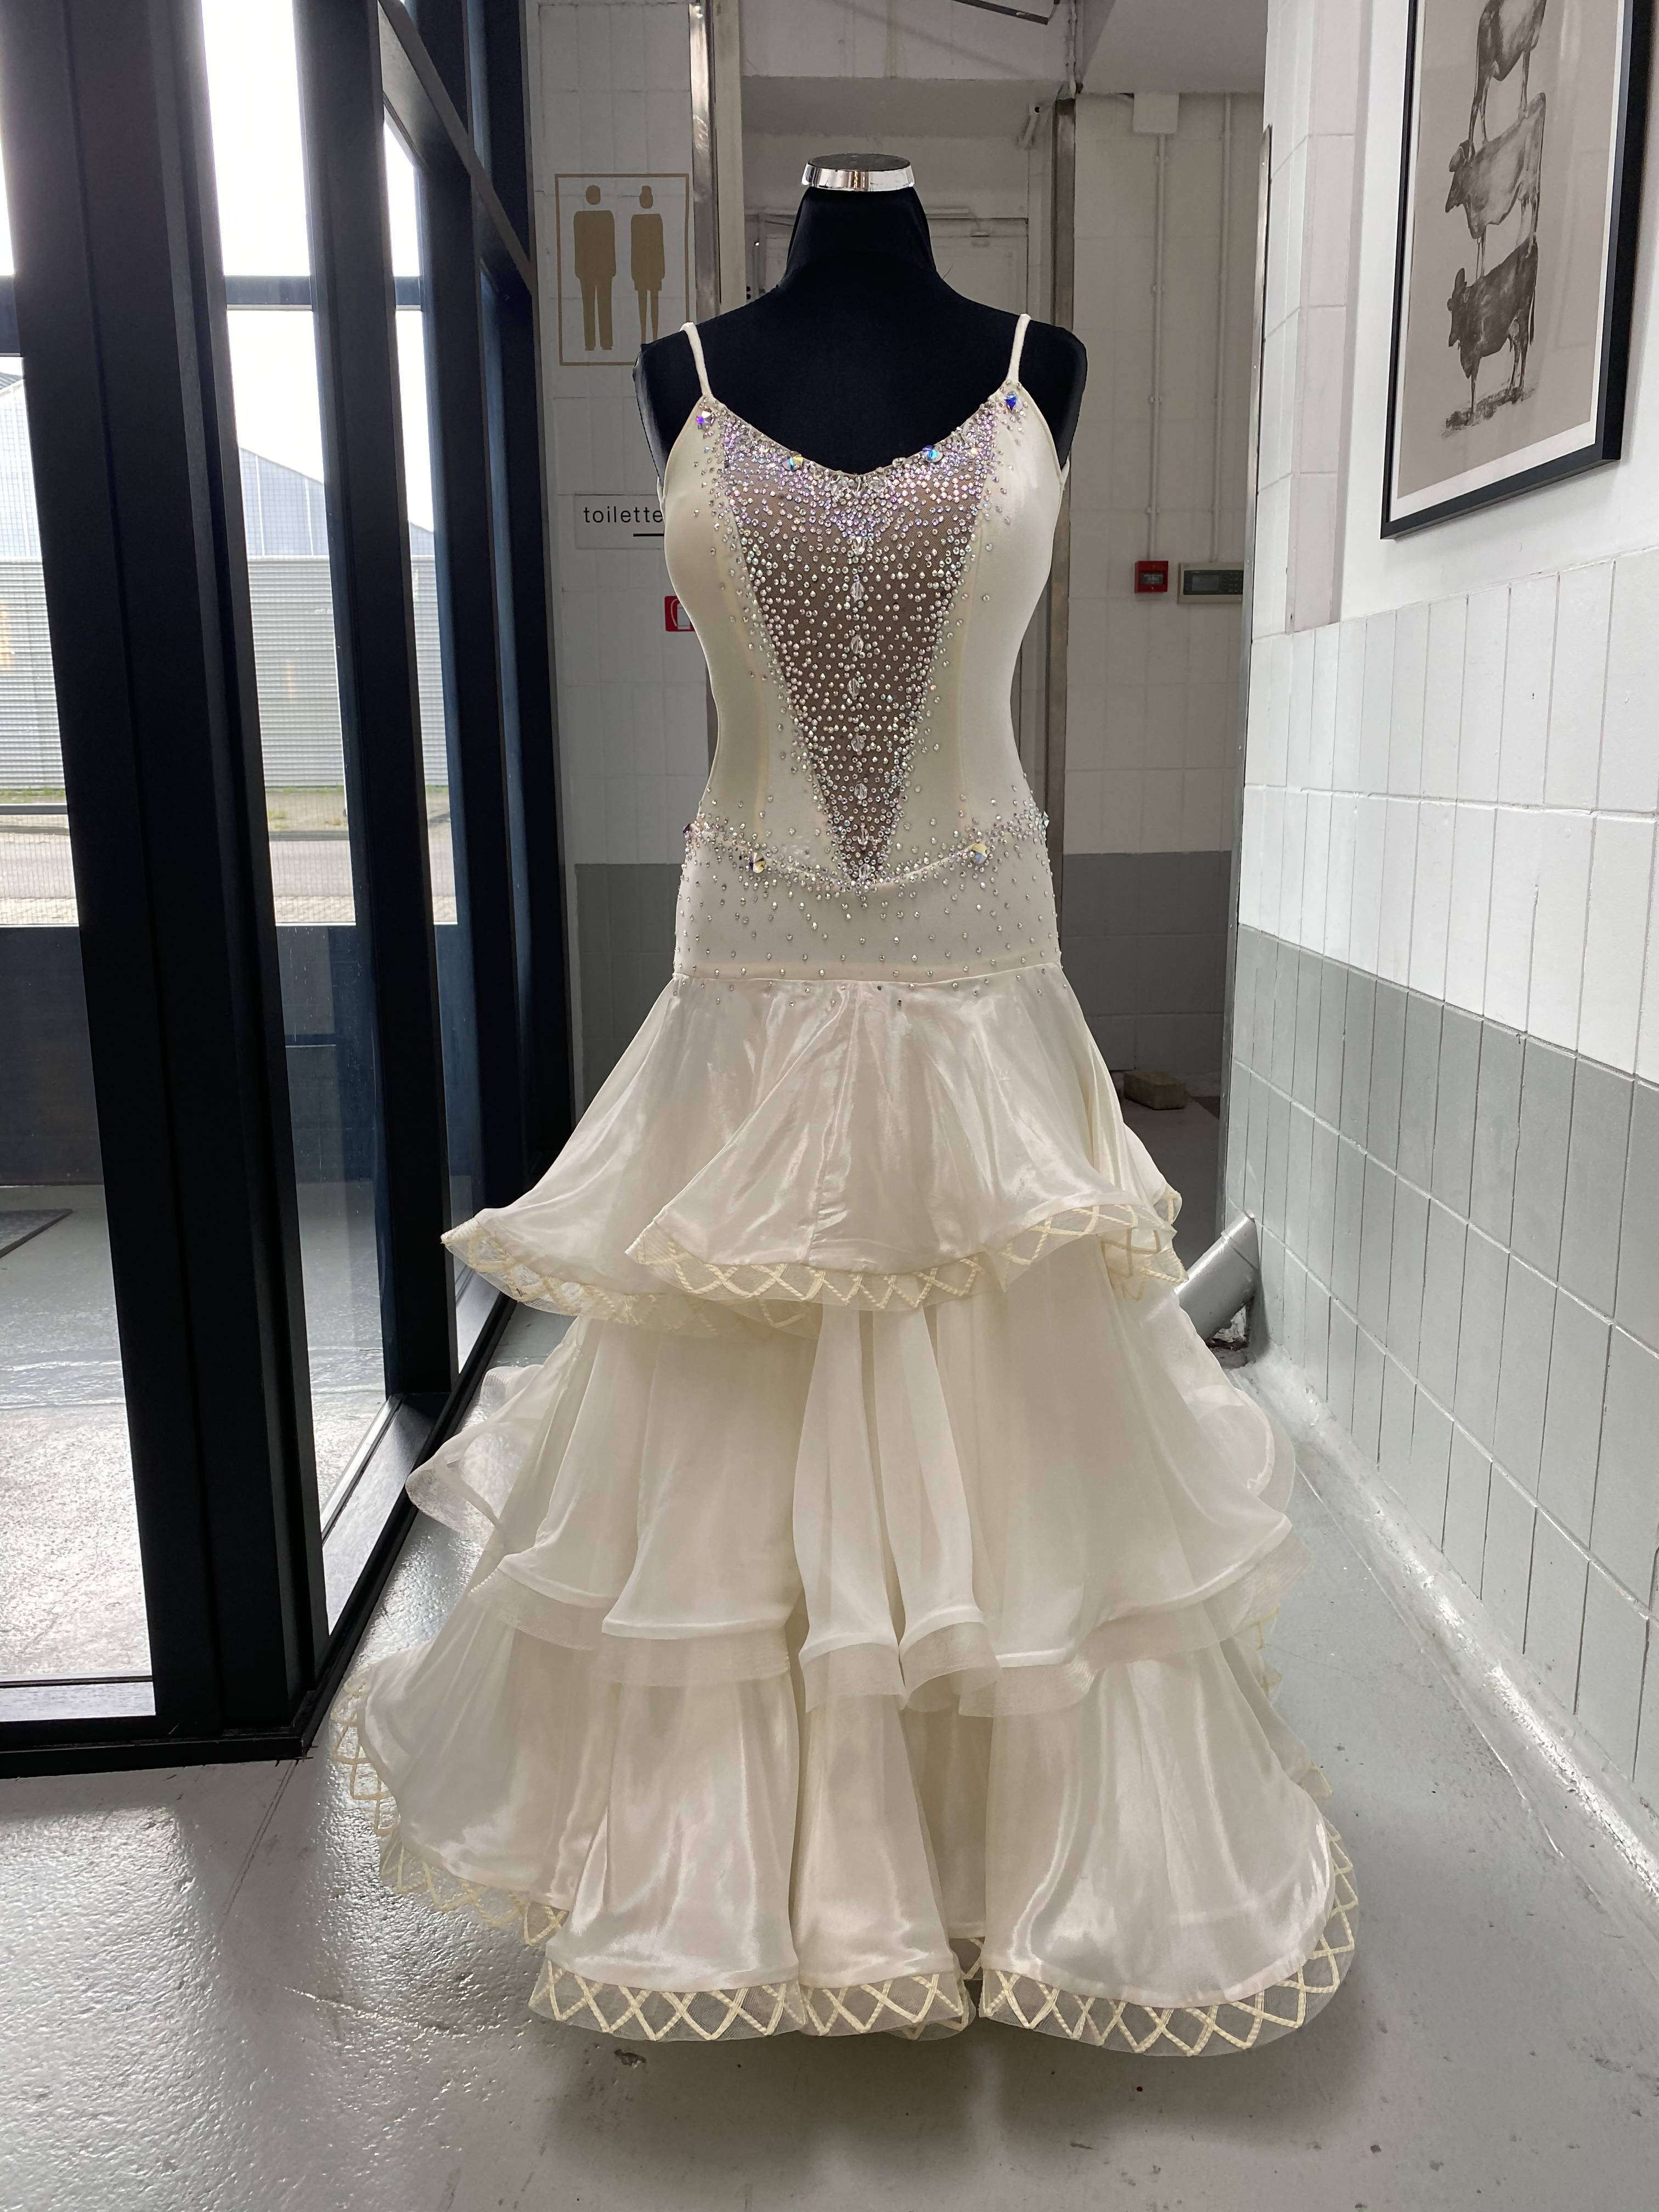 French Vanilla Standard Ballroom Dress (ballroom dress for sale, standard, modern, smooth)